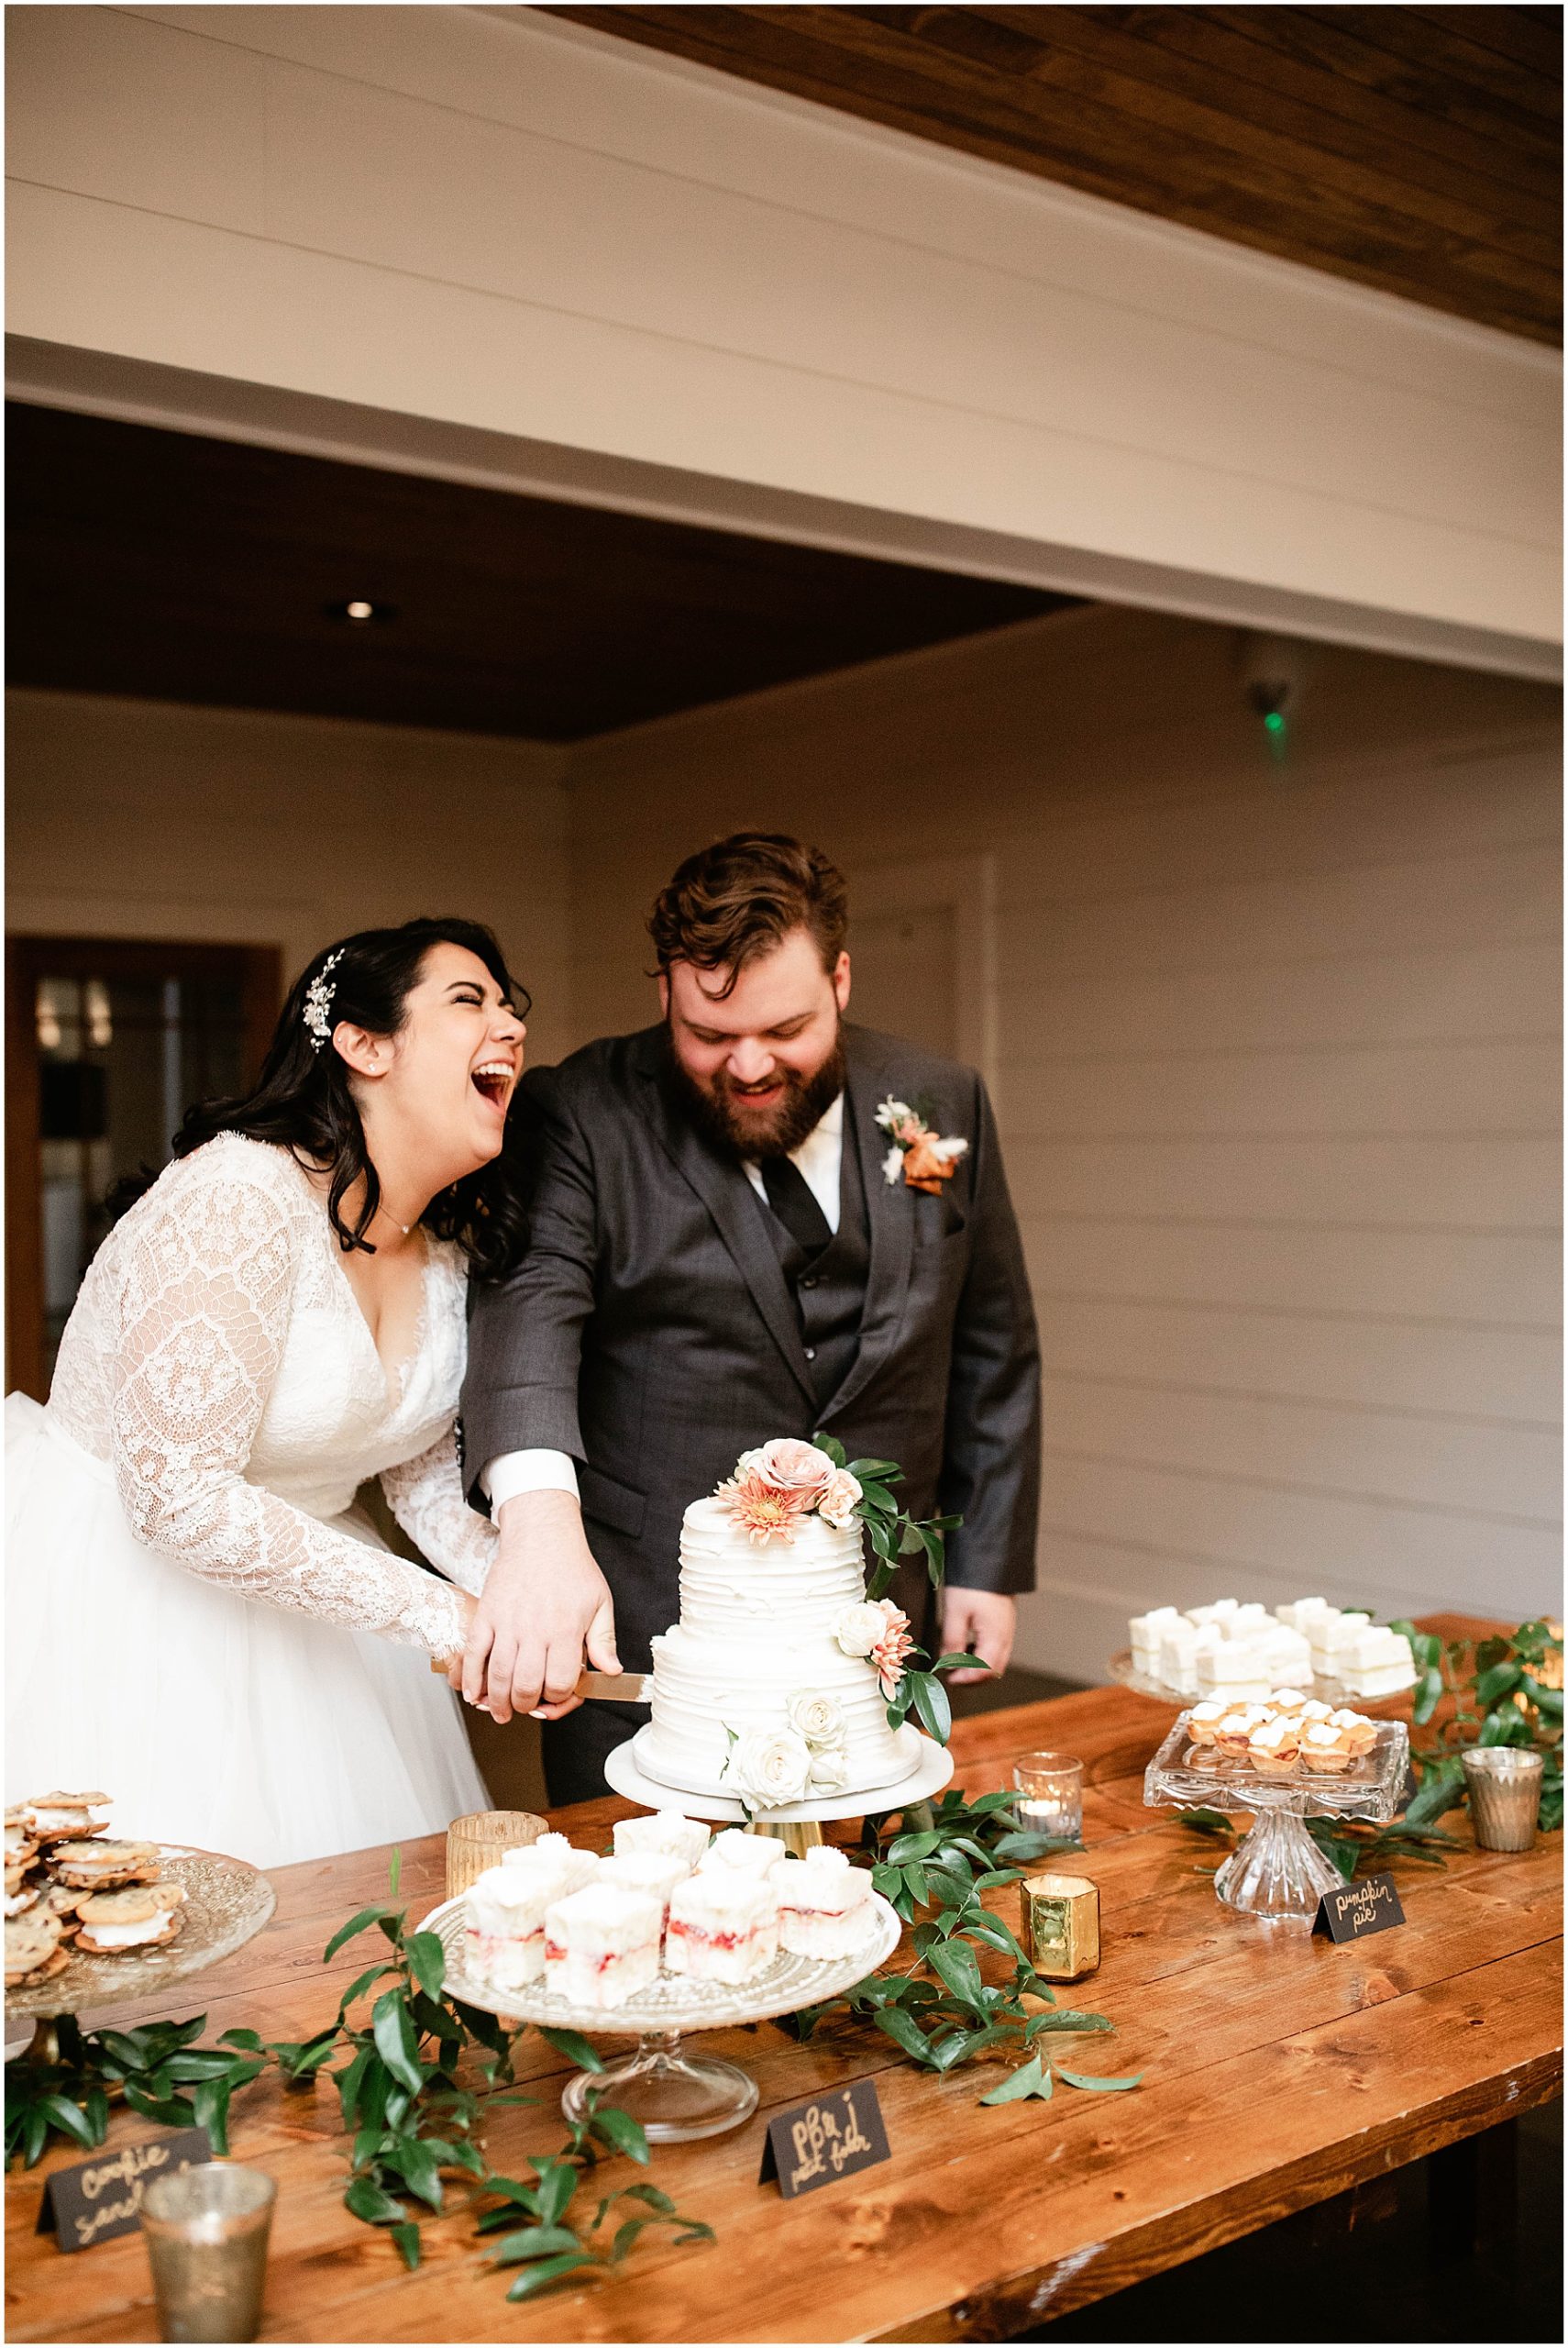 bride and groom cutting wedding cake at nc wedding reception